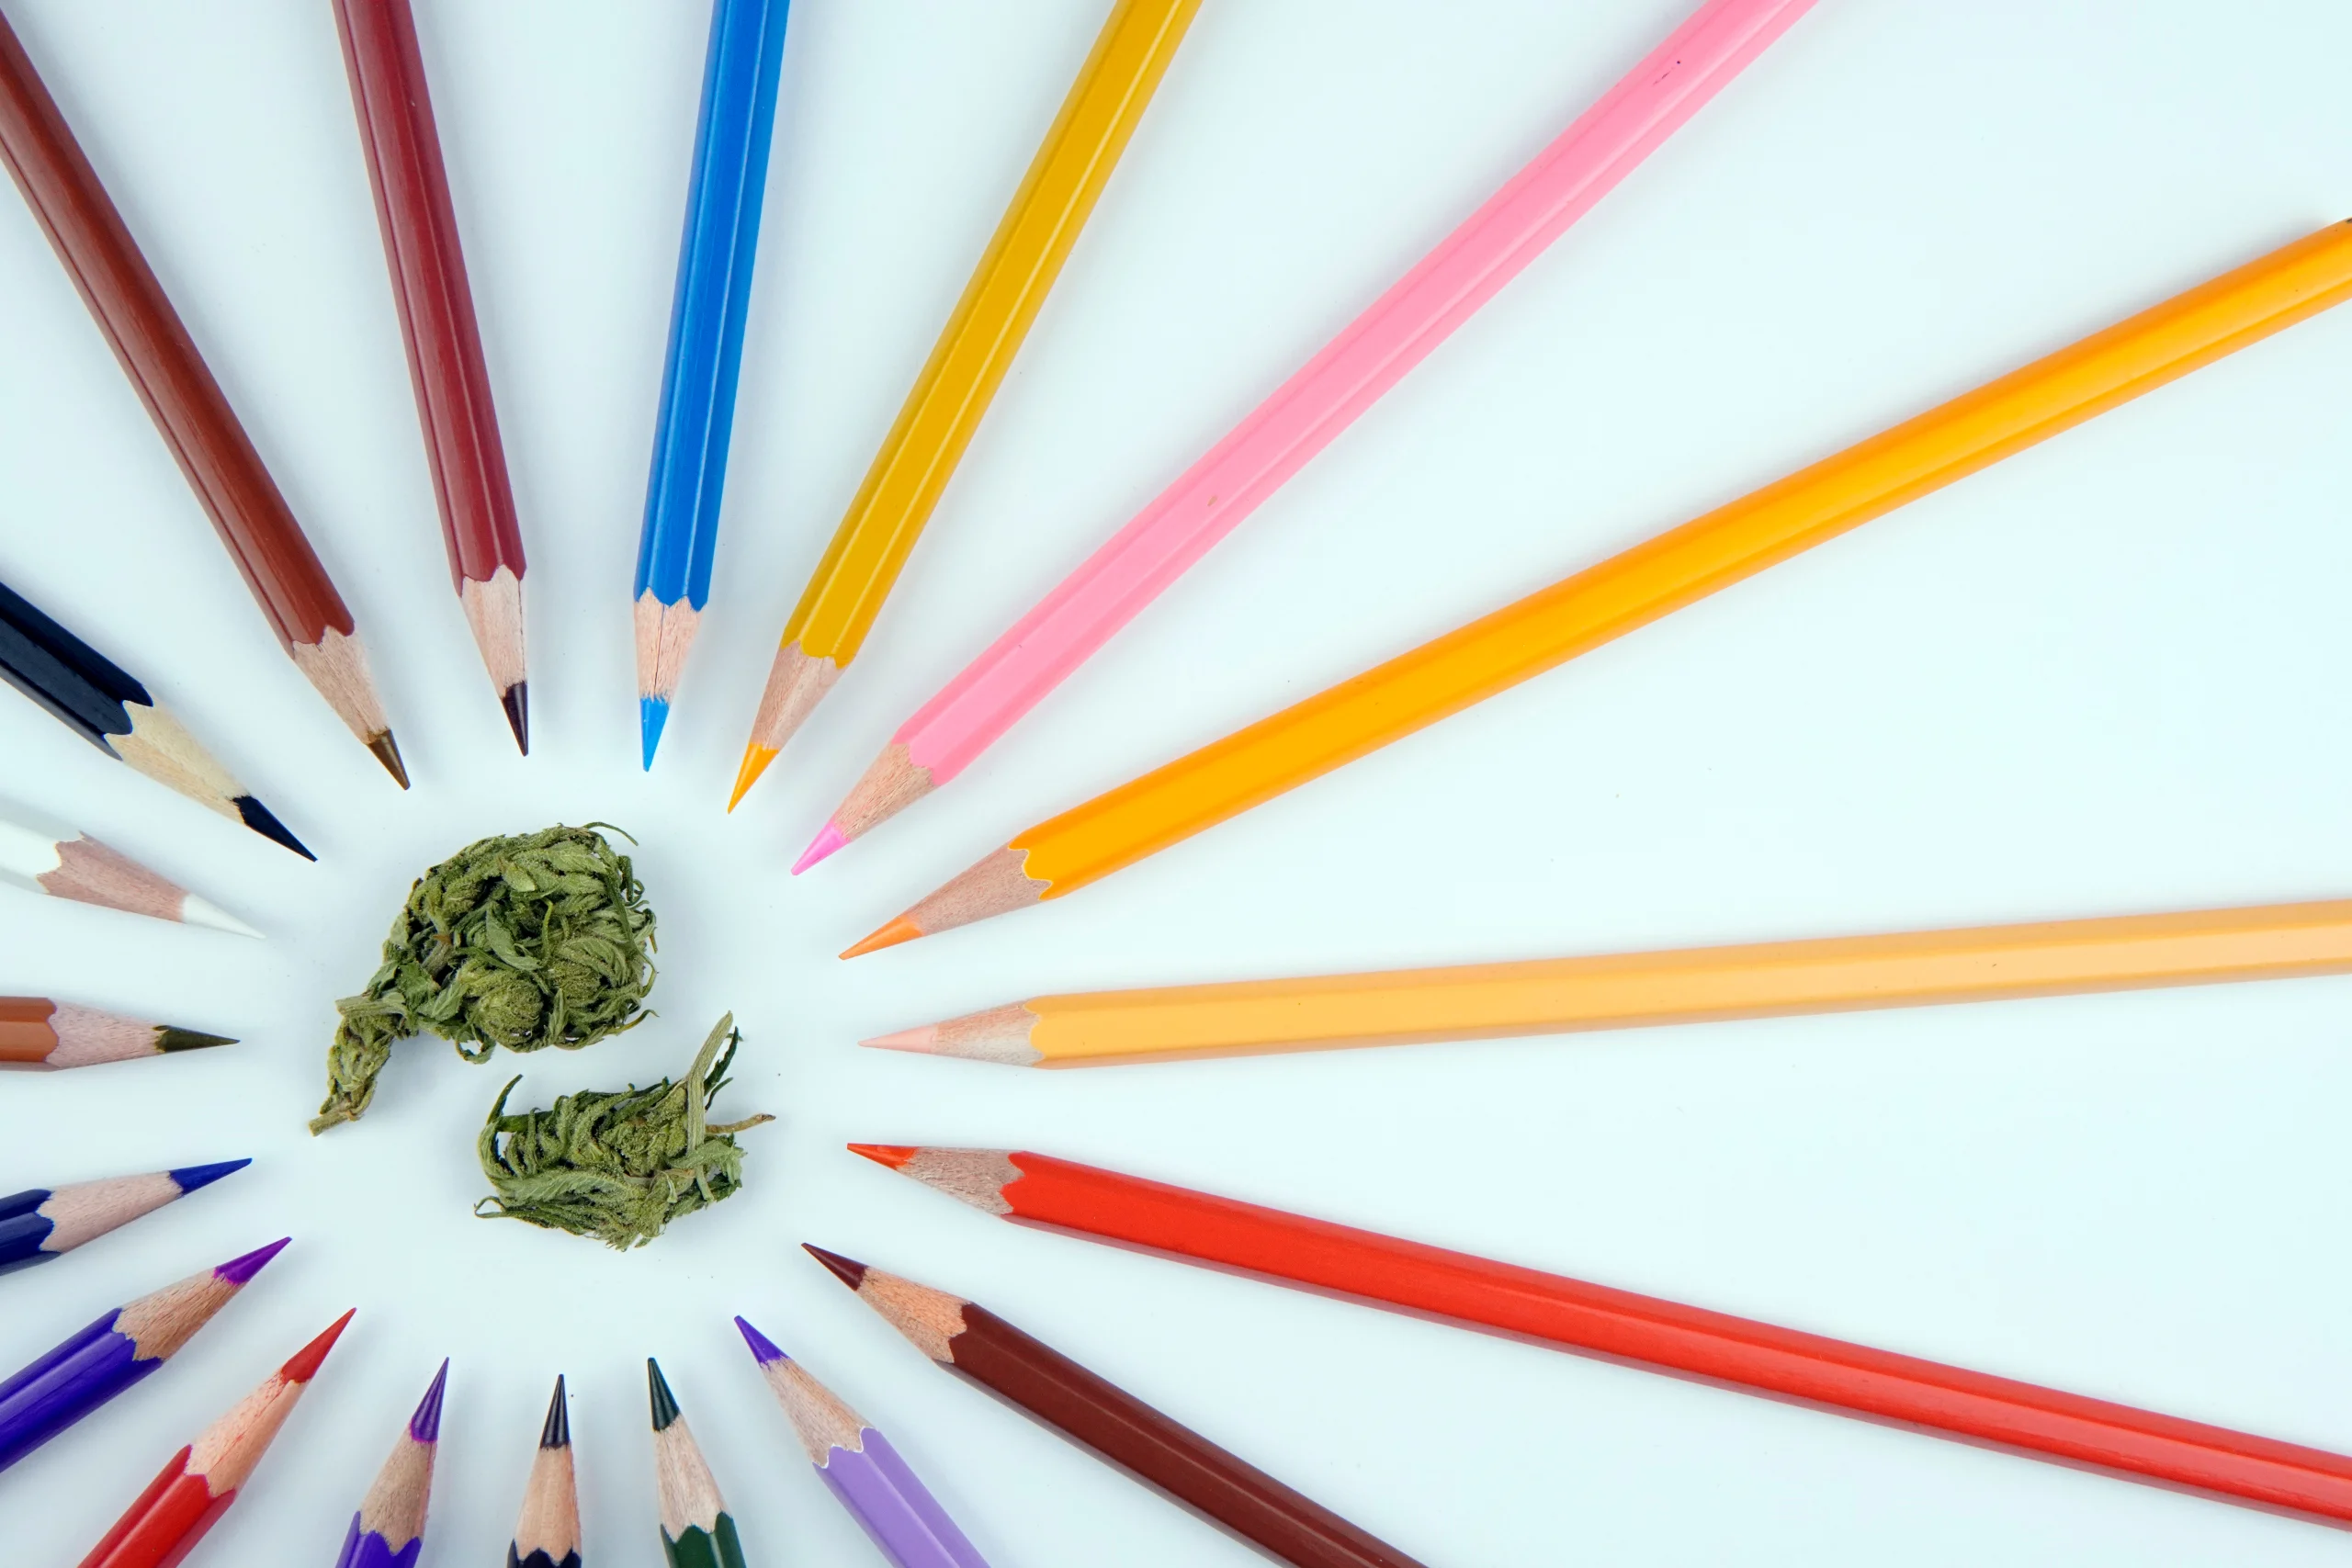 Cannabis and creativity